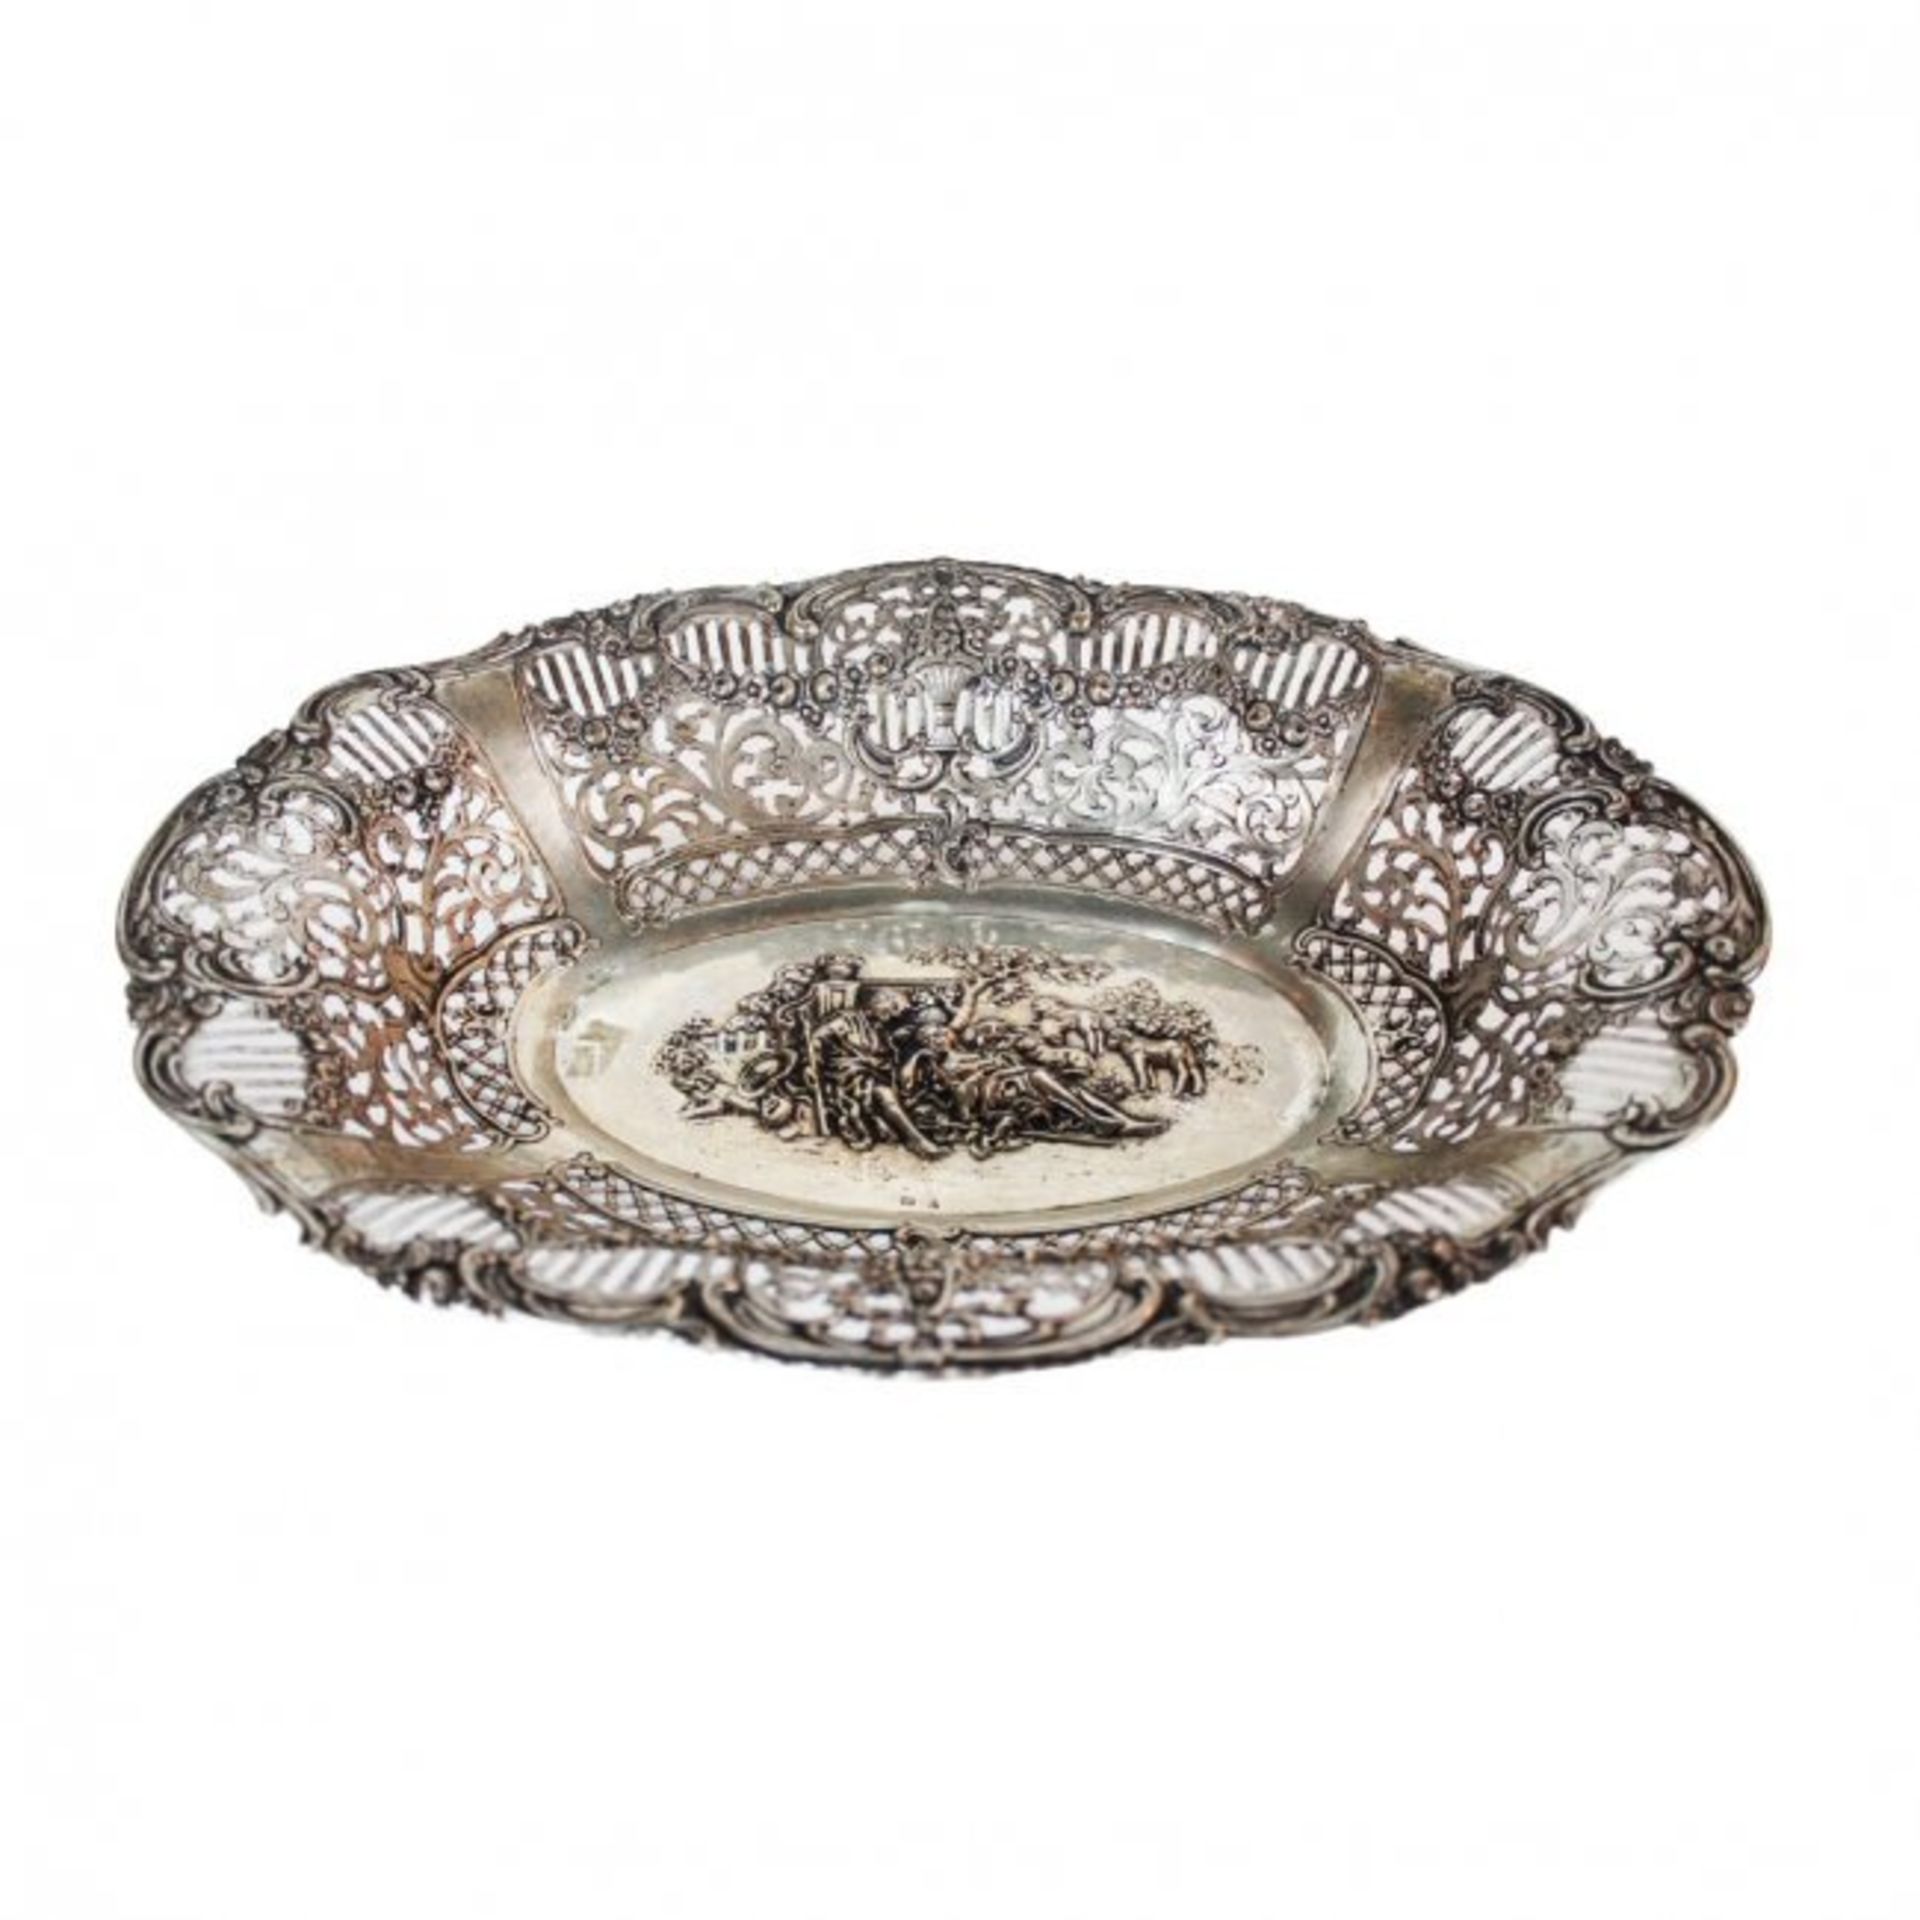 Rococo style antique silver plate